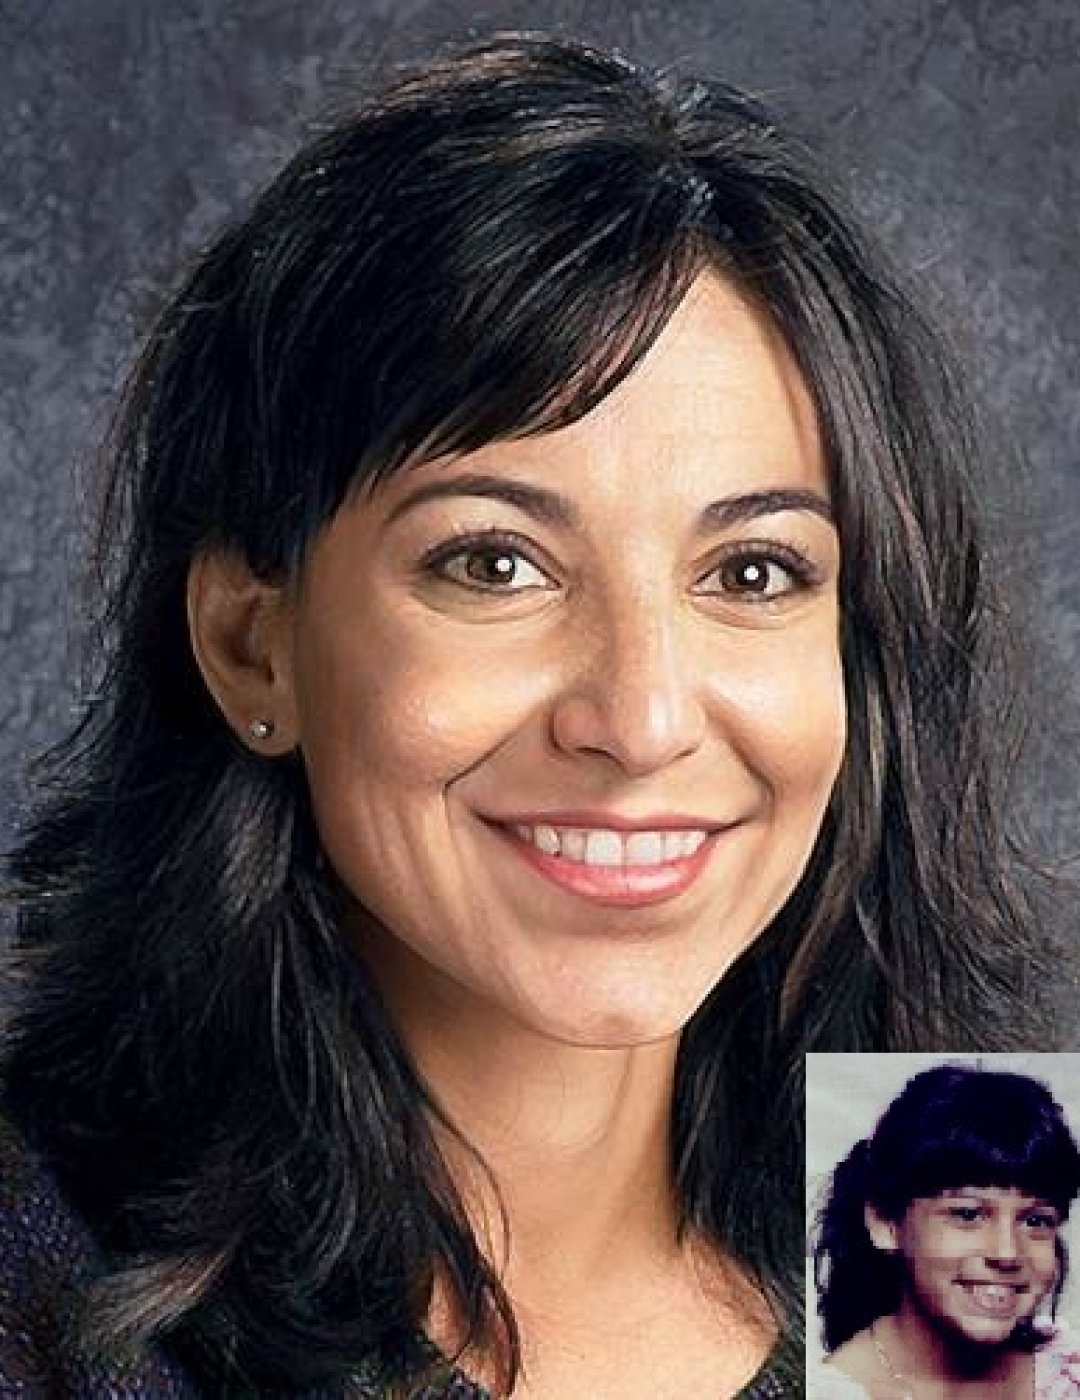 Jennifer Marteliz. Missing child with black hair and brown eyes.